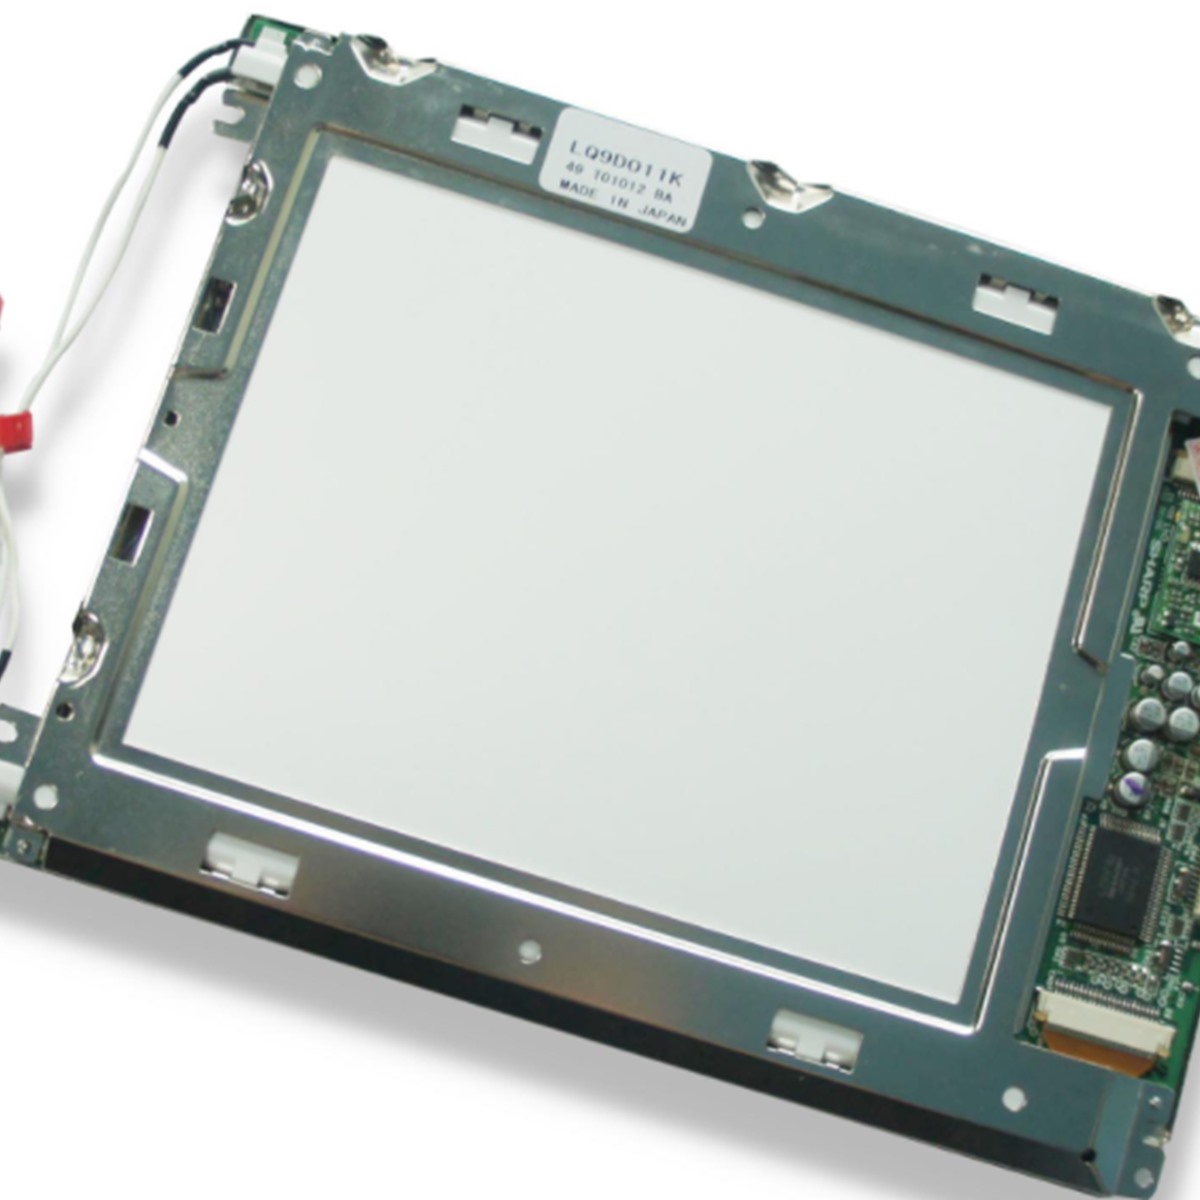 SHARP LQ9D011K LCD